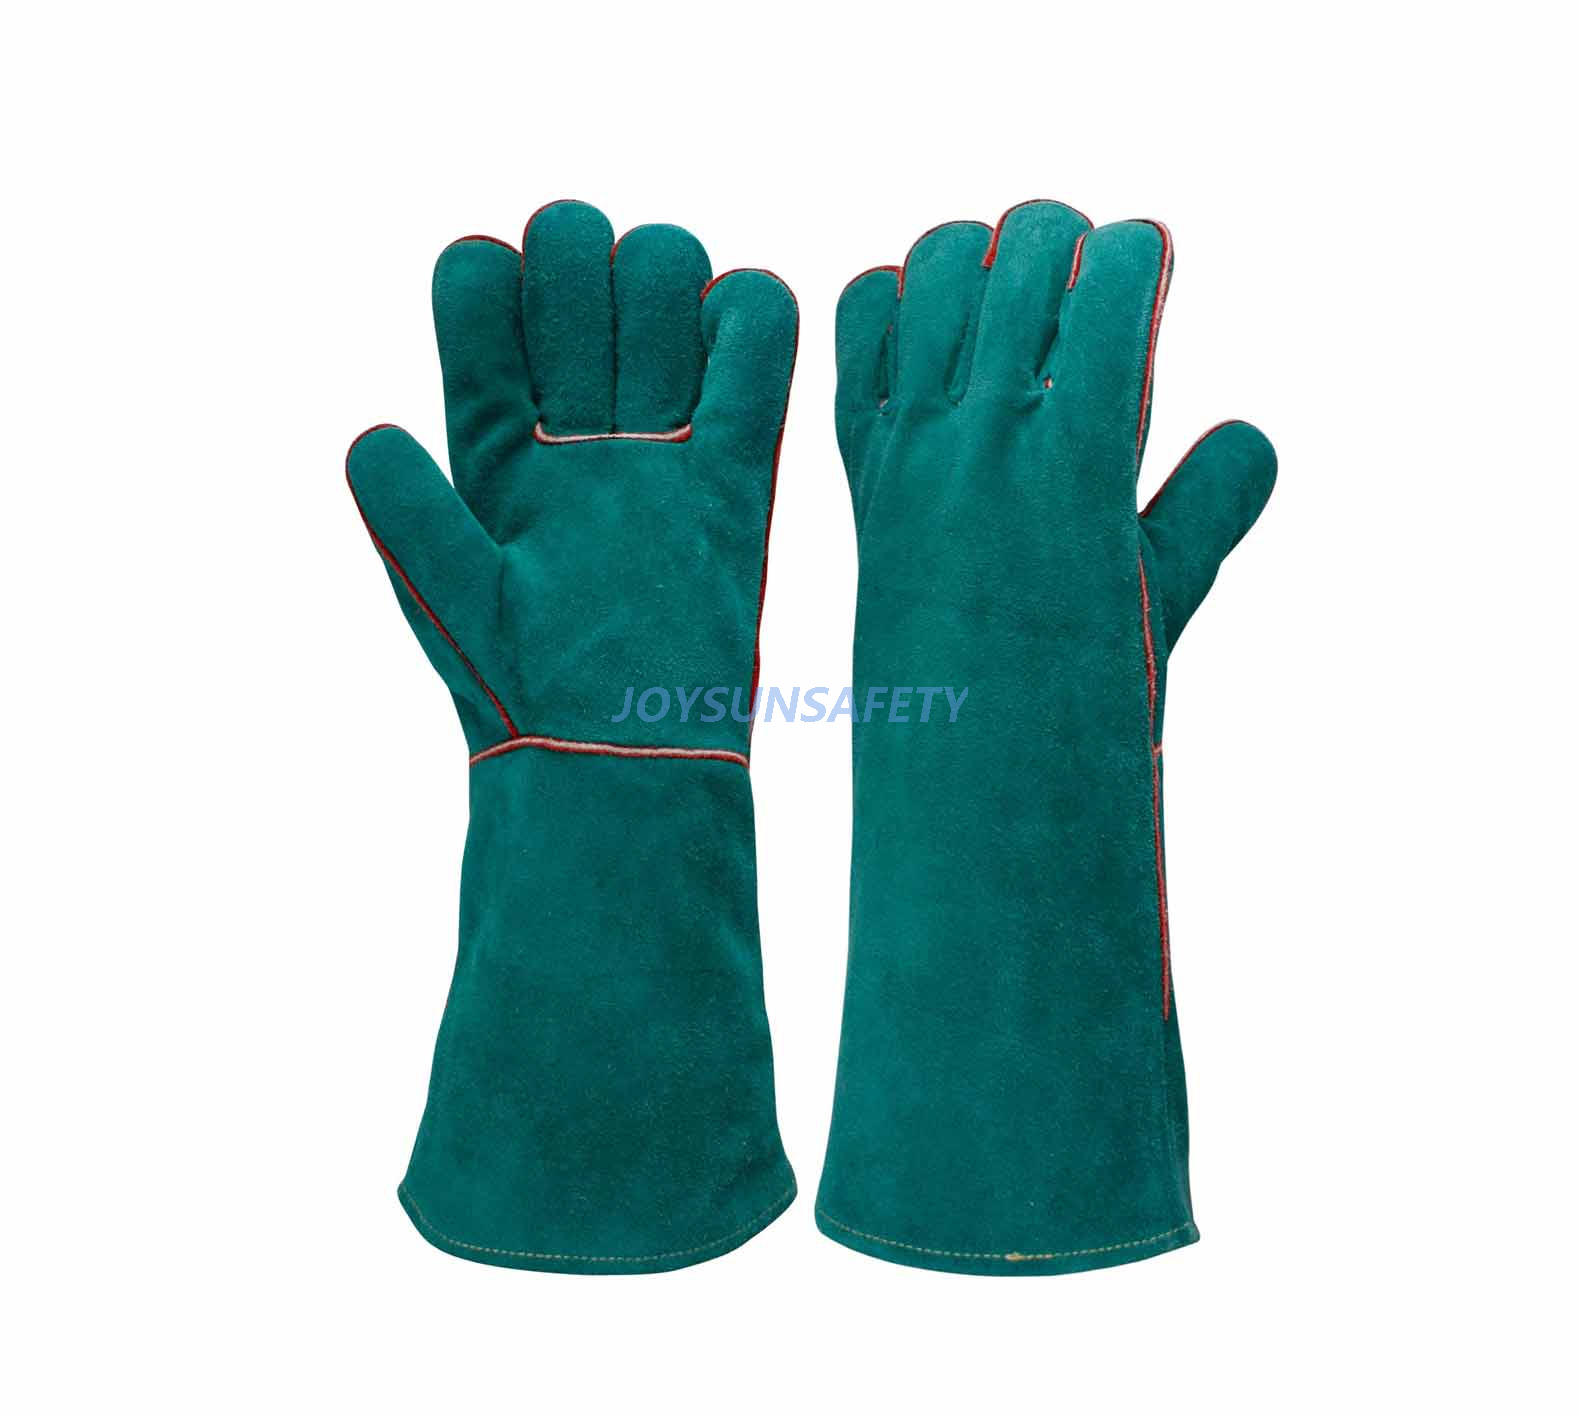 WCBG01 green welding leather gloves